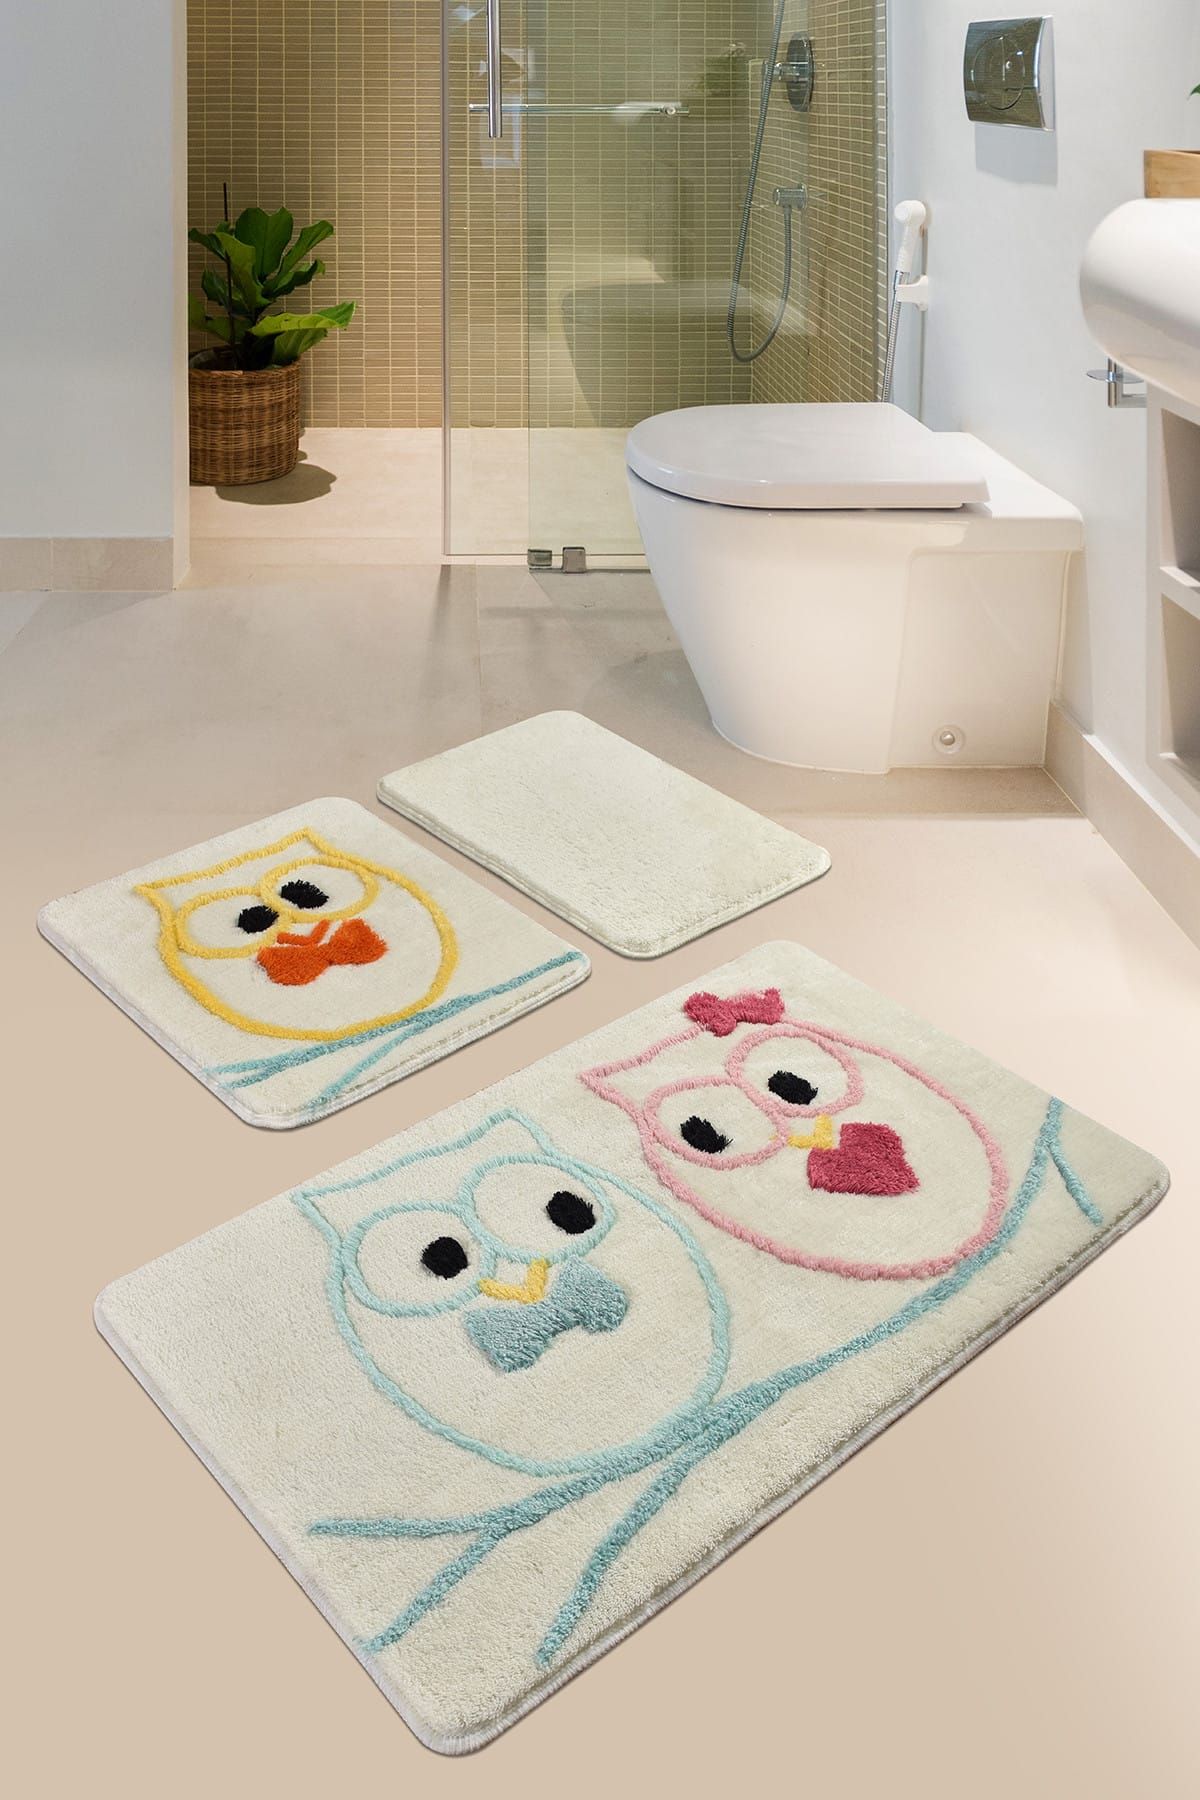 Chilai Home Baykuş Renkli 3lü Set Banyo Halısı Yıkanabilir, Kaymaz Taban